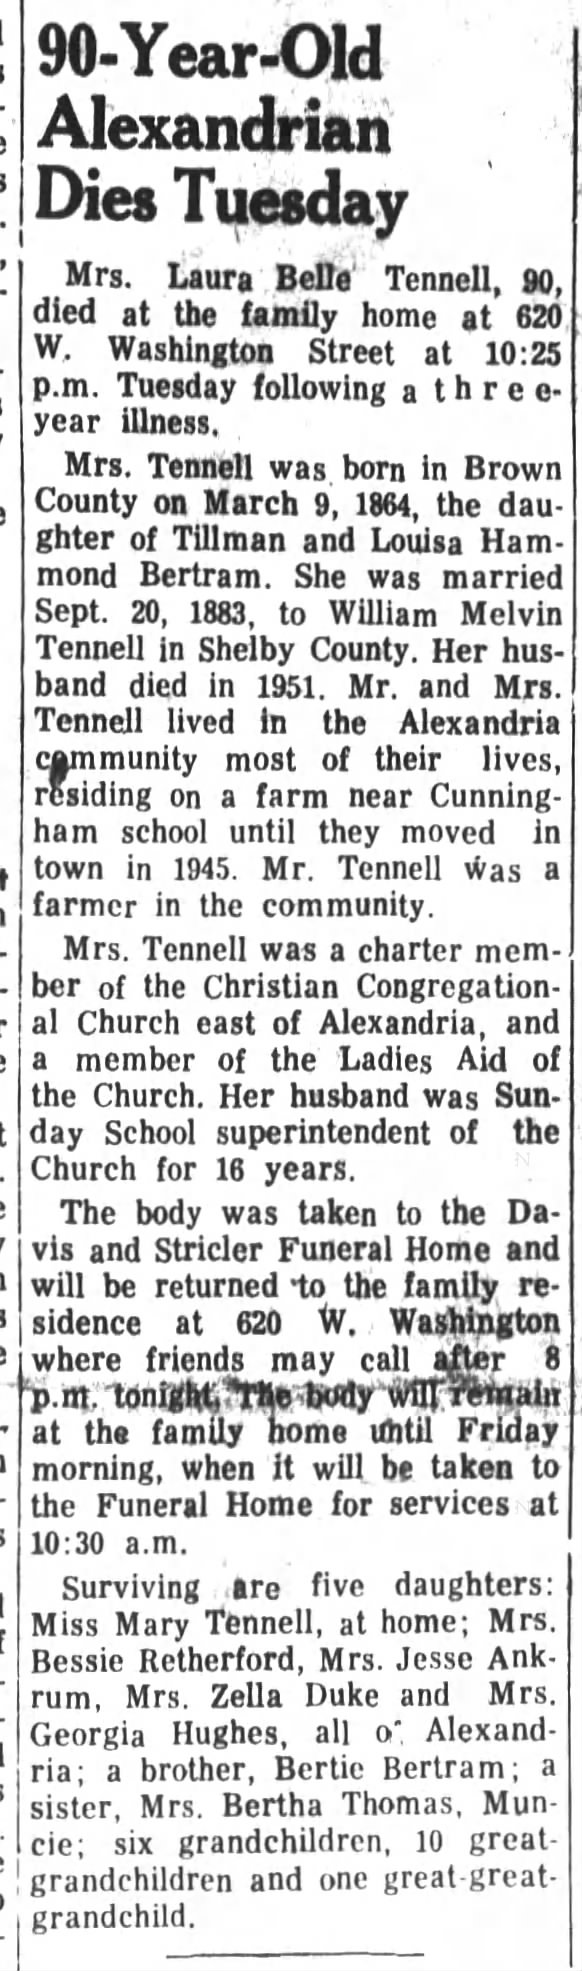 Tennell, Laura Belle Bertram; obit; The Alexandria Times-Tribune; Oct. 13, 1954, Wed. pg 1